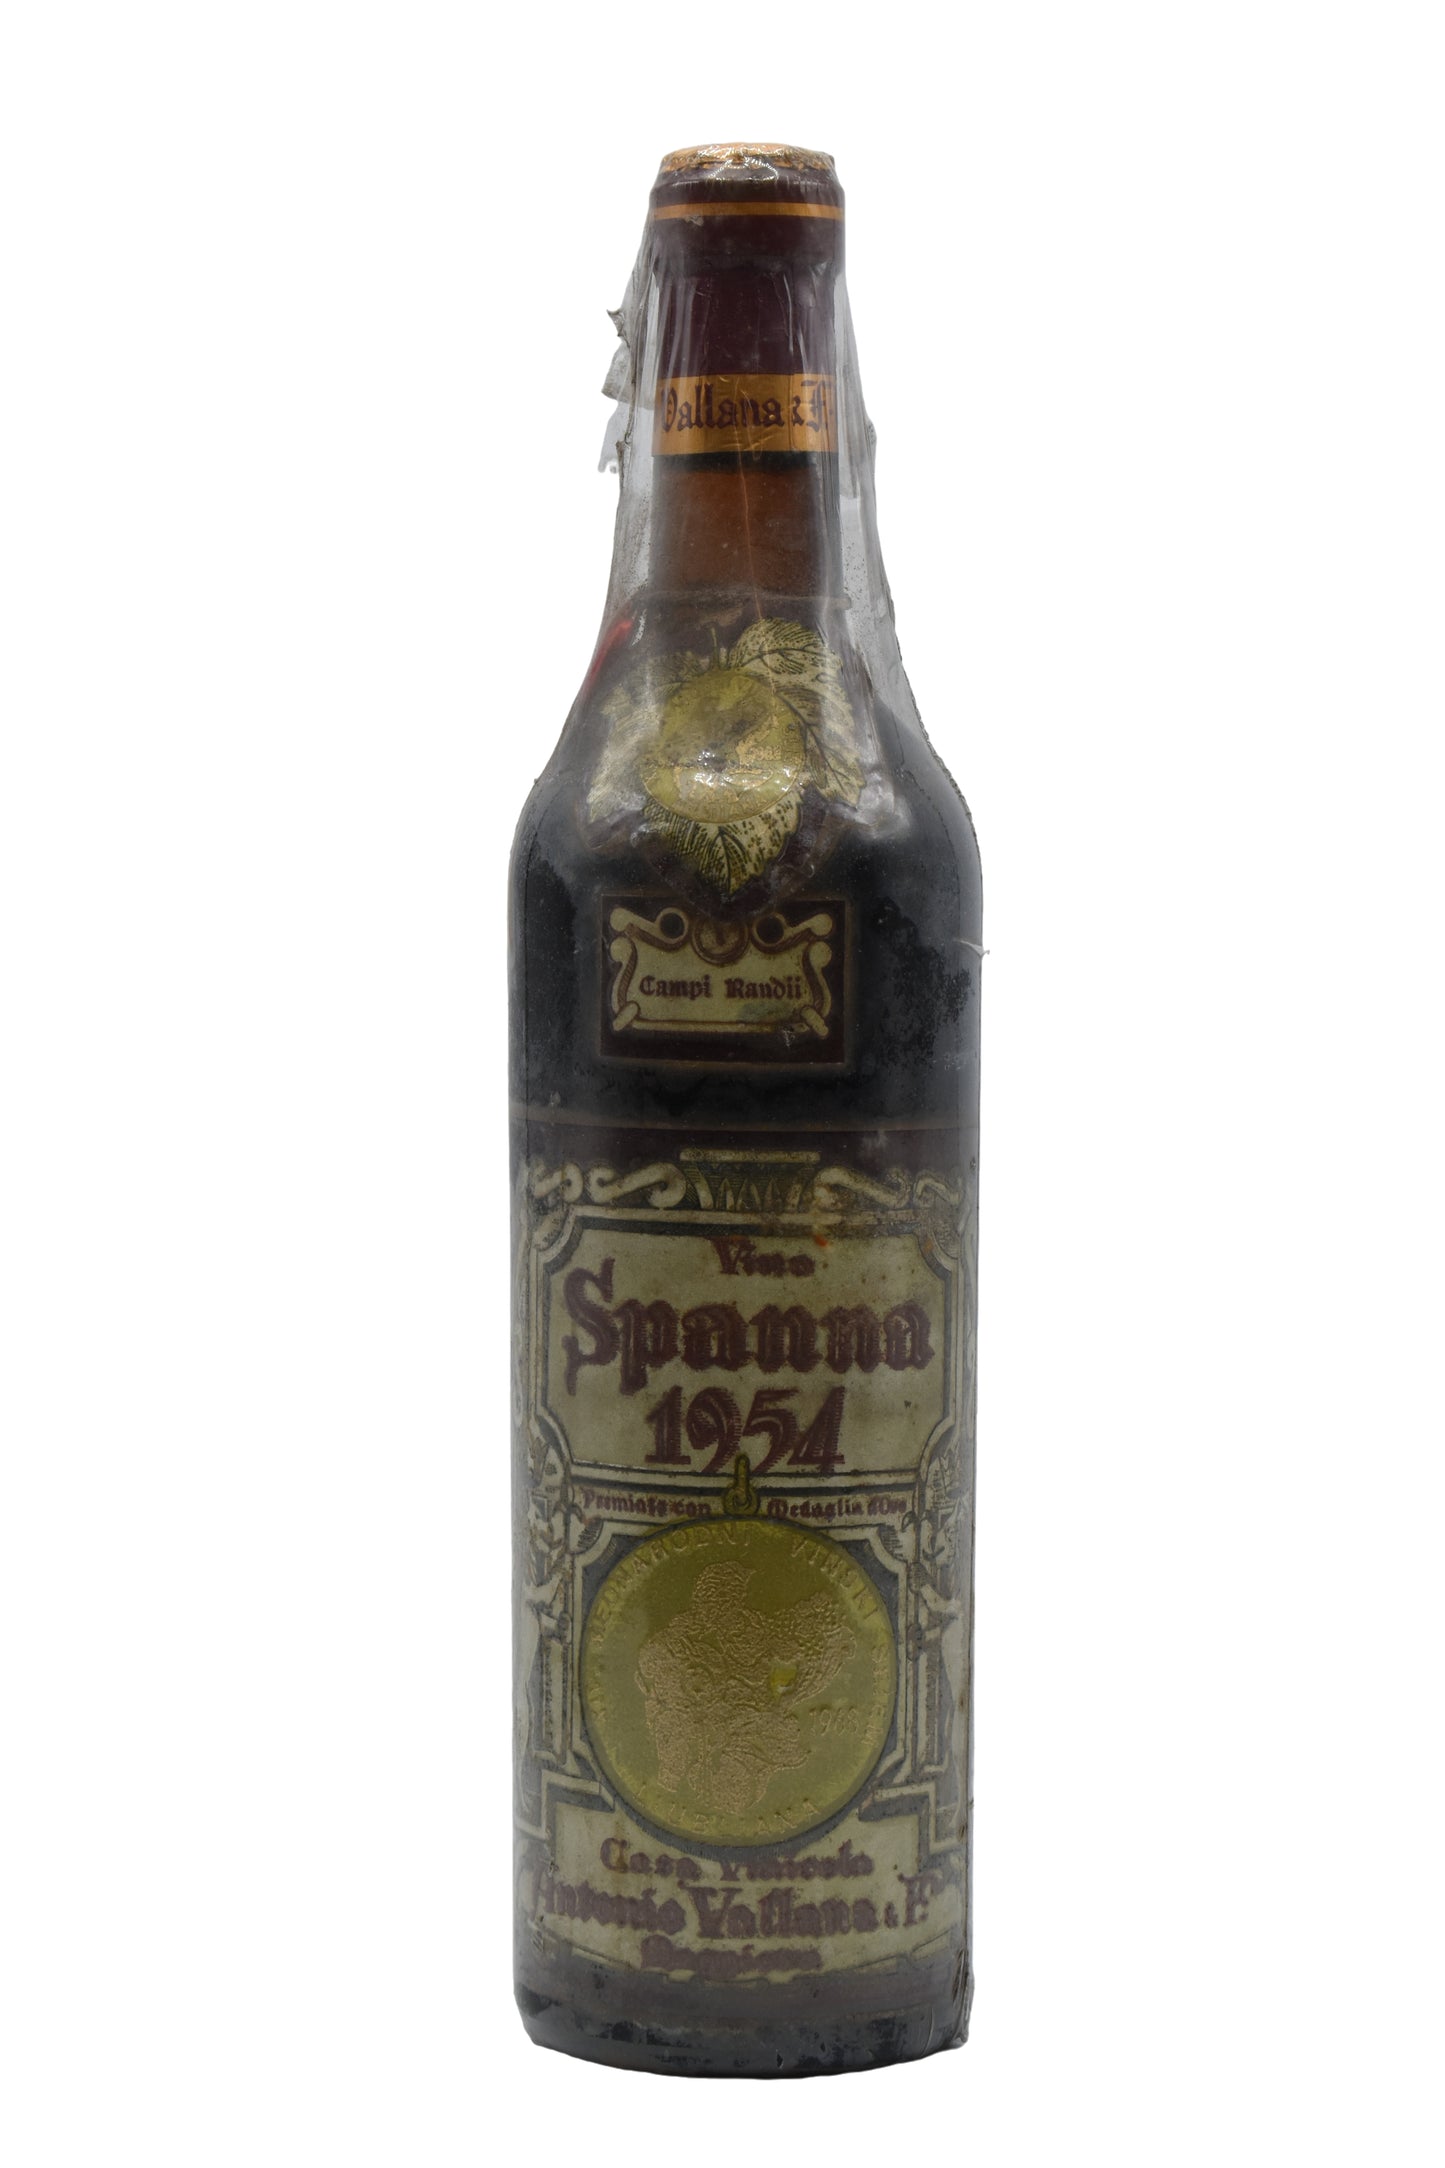 1954 Antonio Vallana, Spanna Campi Raudii 750ml - Walker Wine Co.